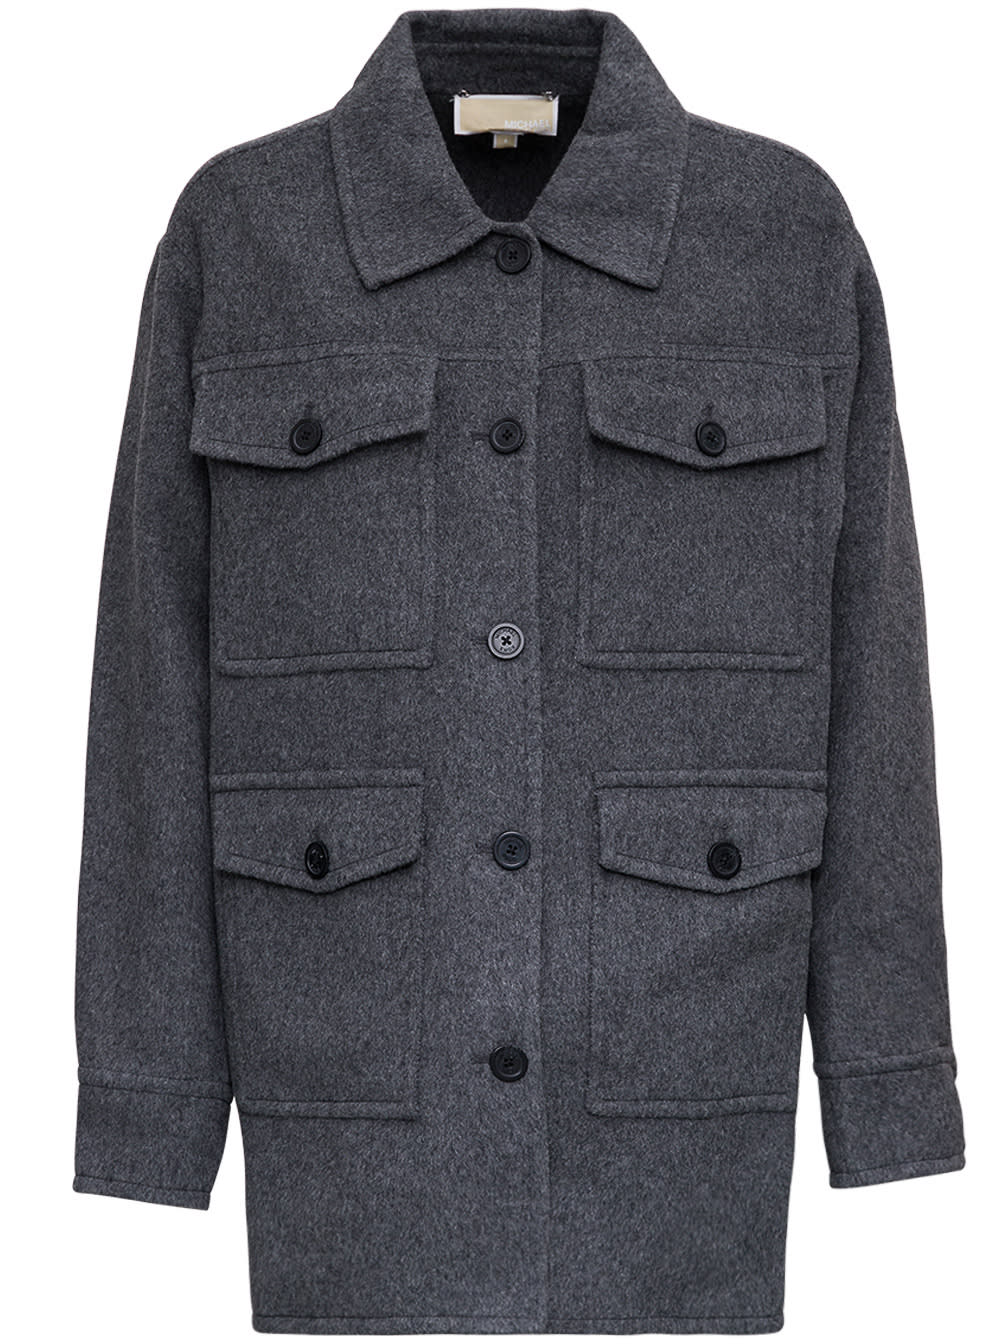 MICHAEL Michael Kors Grey Wool Blend Jacket With Pockets